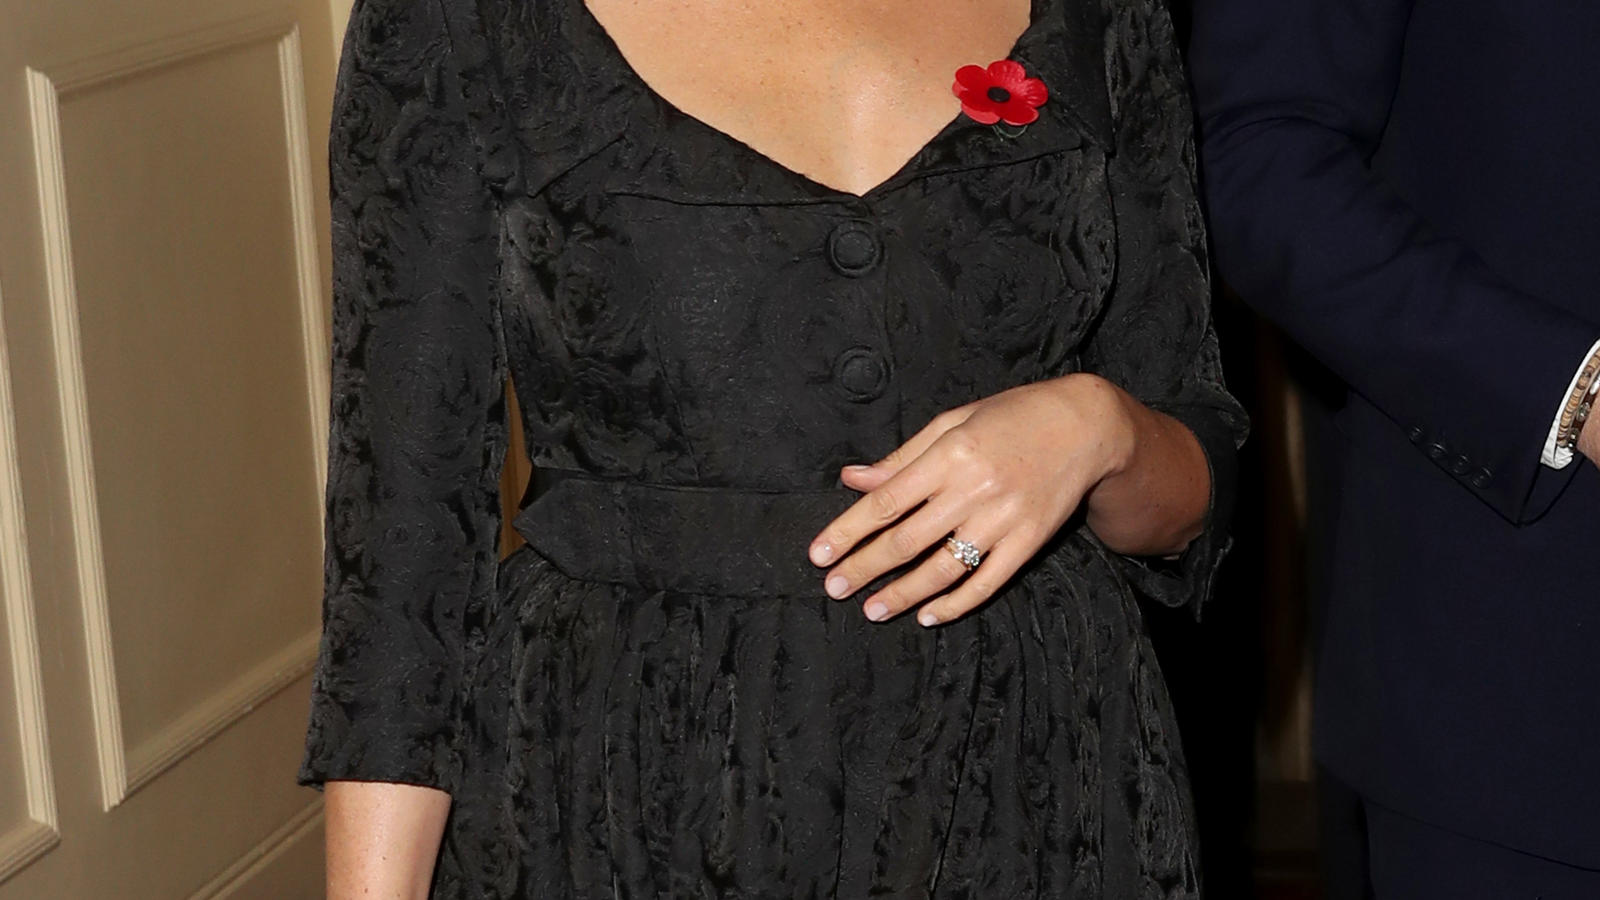 Herzogin Meghan beim "Festival of Remembrance" 2019 in der Royal Albert Hall in London.